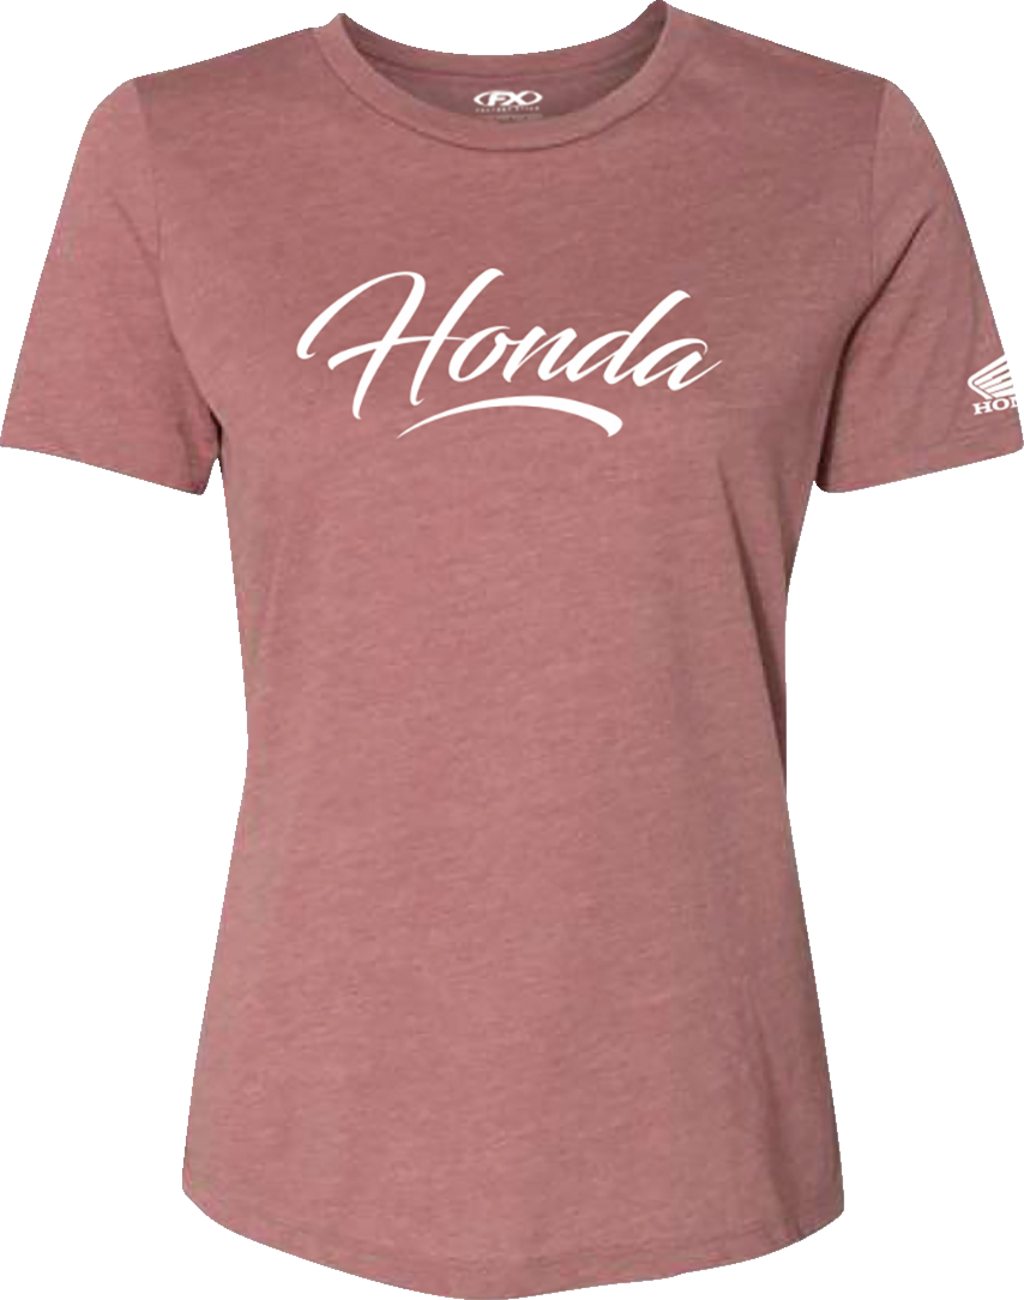 FACTORY EFFEX Women's Honda Script T-Shirt - Heather Mauve - Large 27-87344